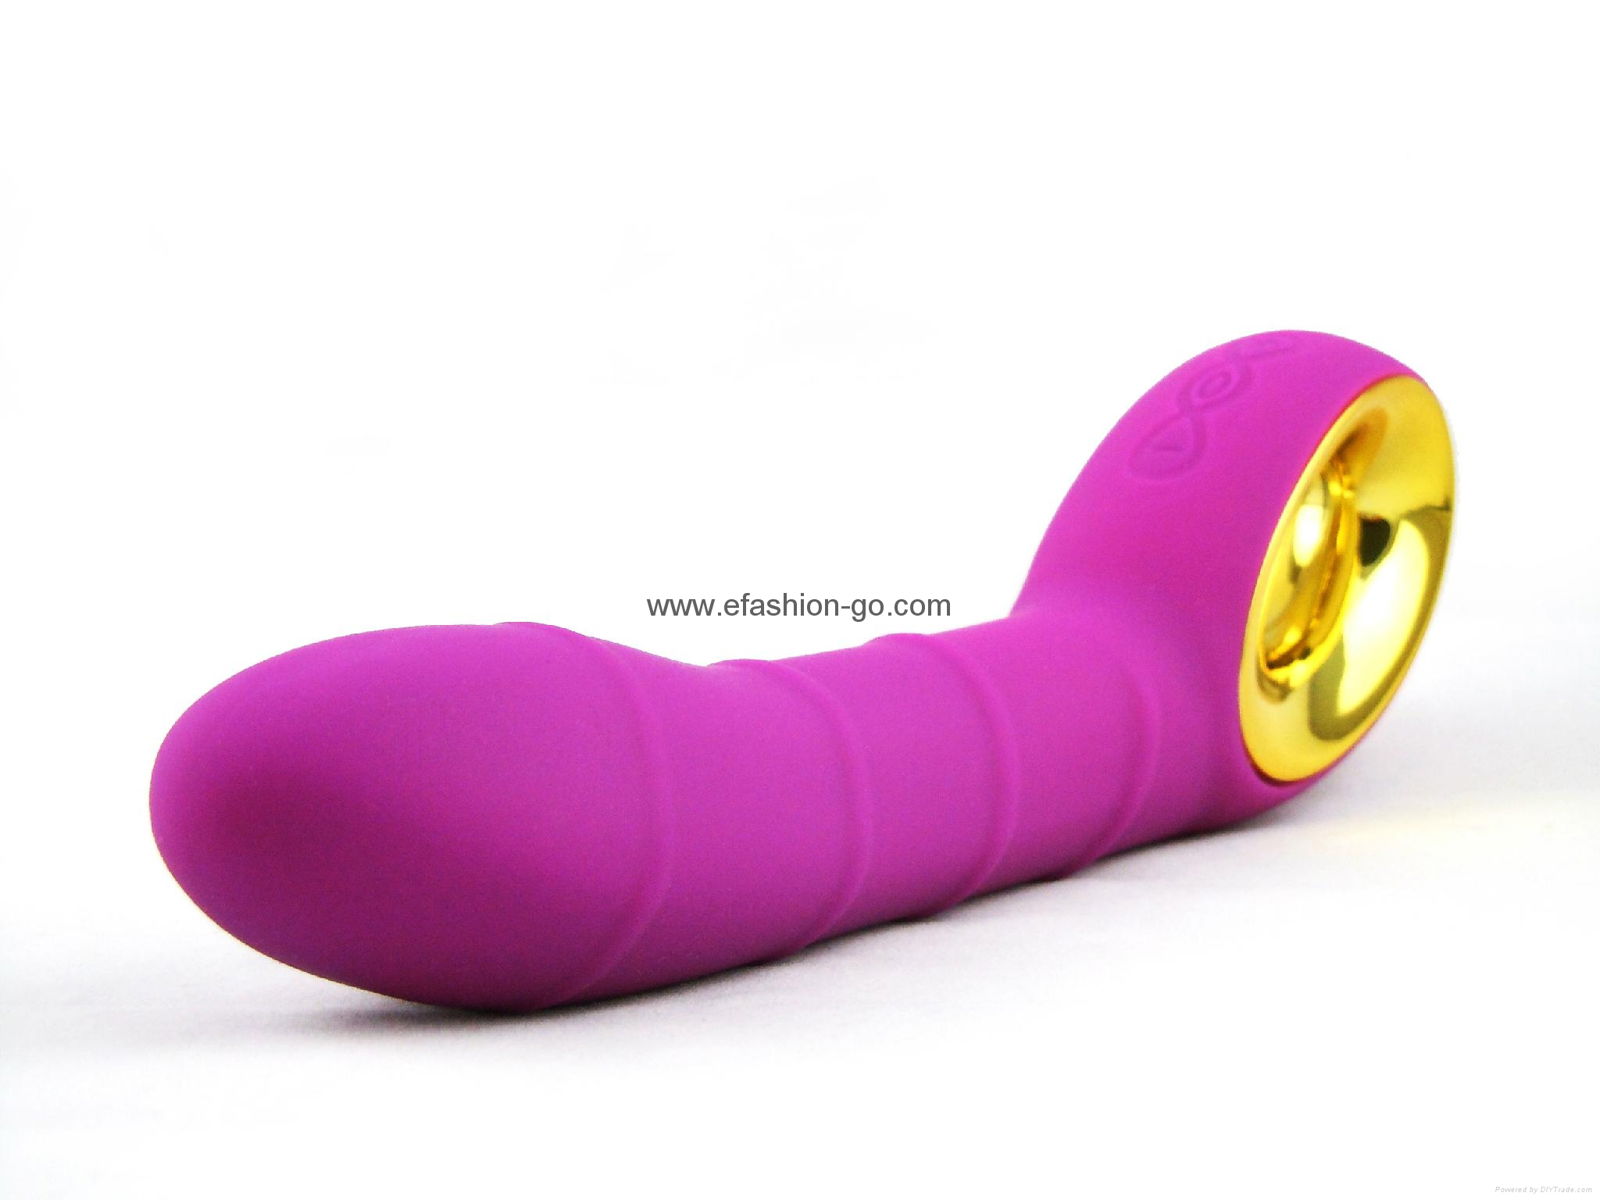 G-spot vagina simulation vibrator for women